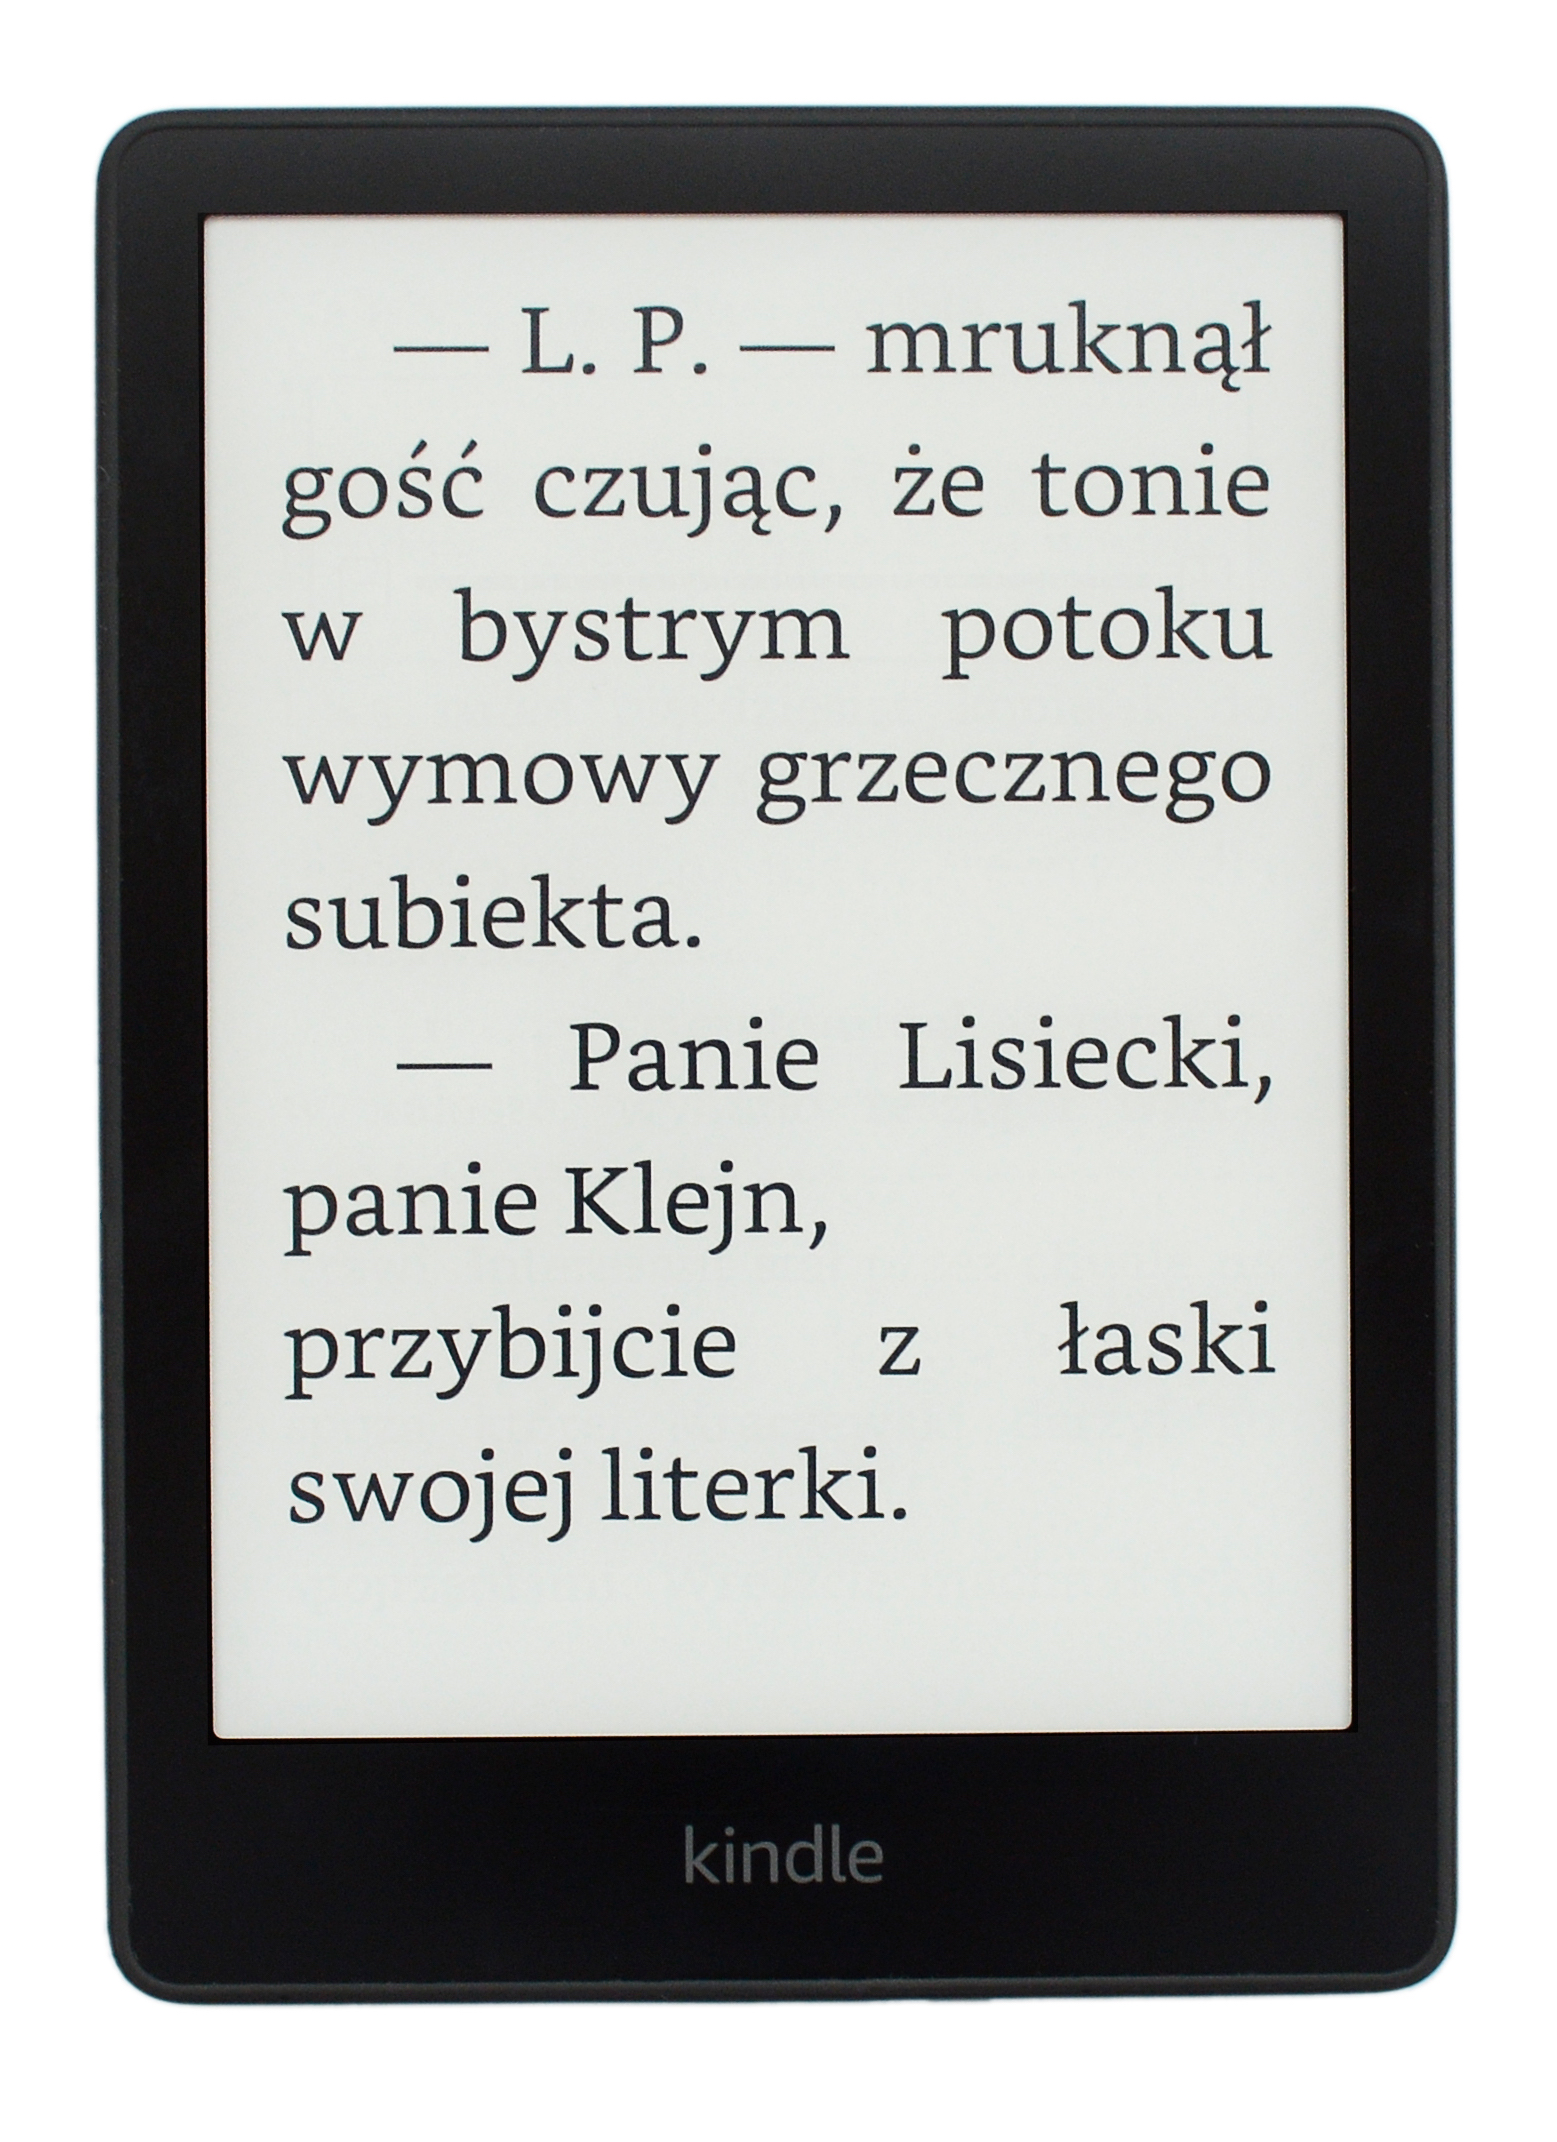 Kindle Paperwhite 5